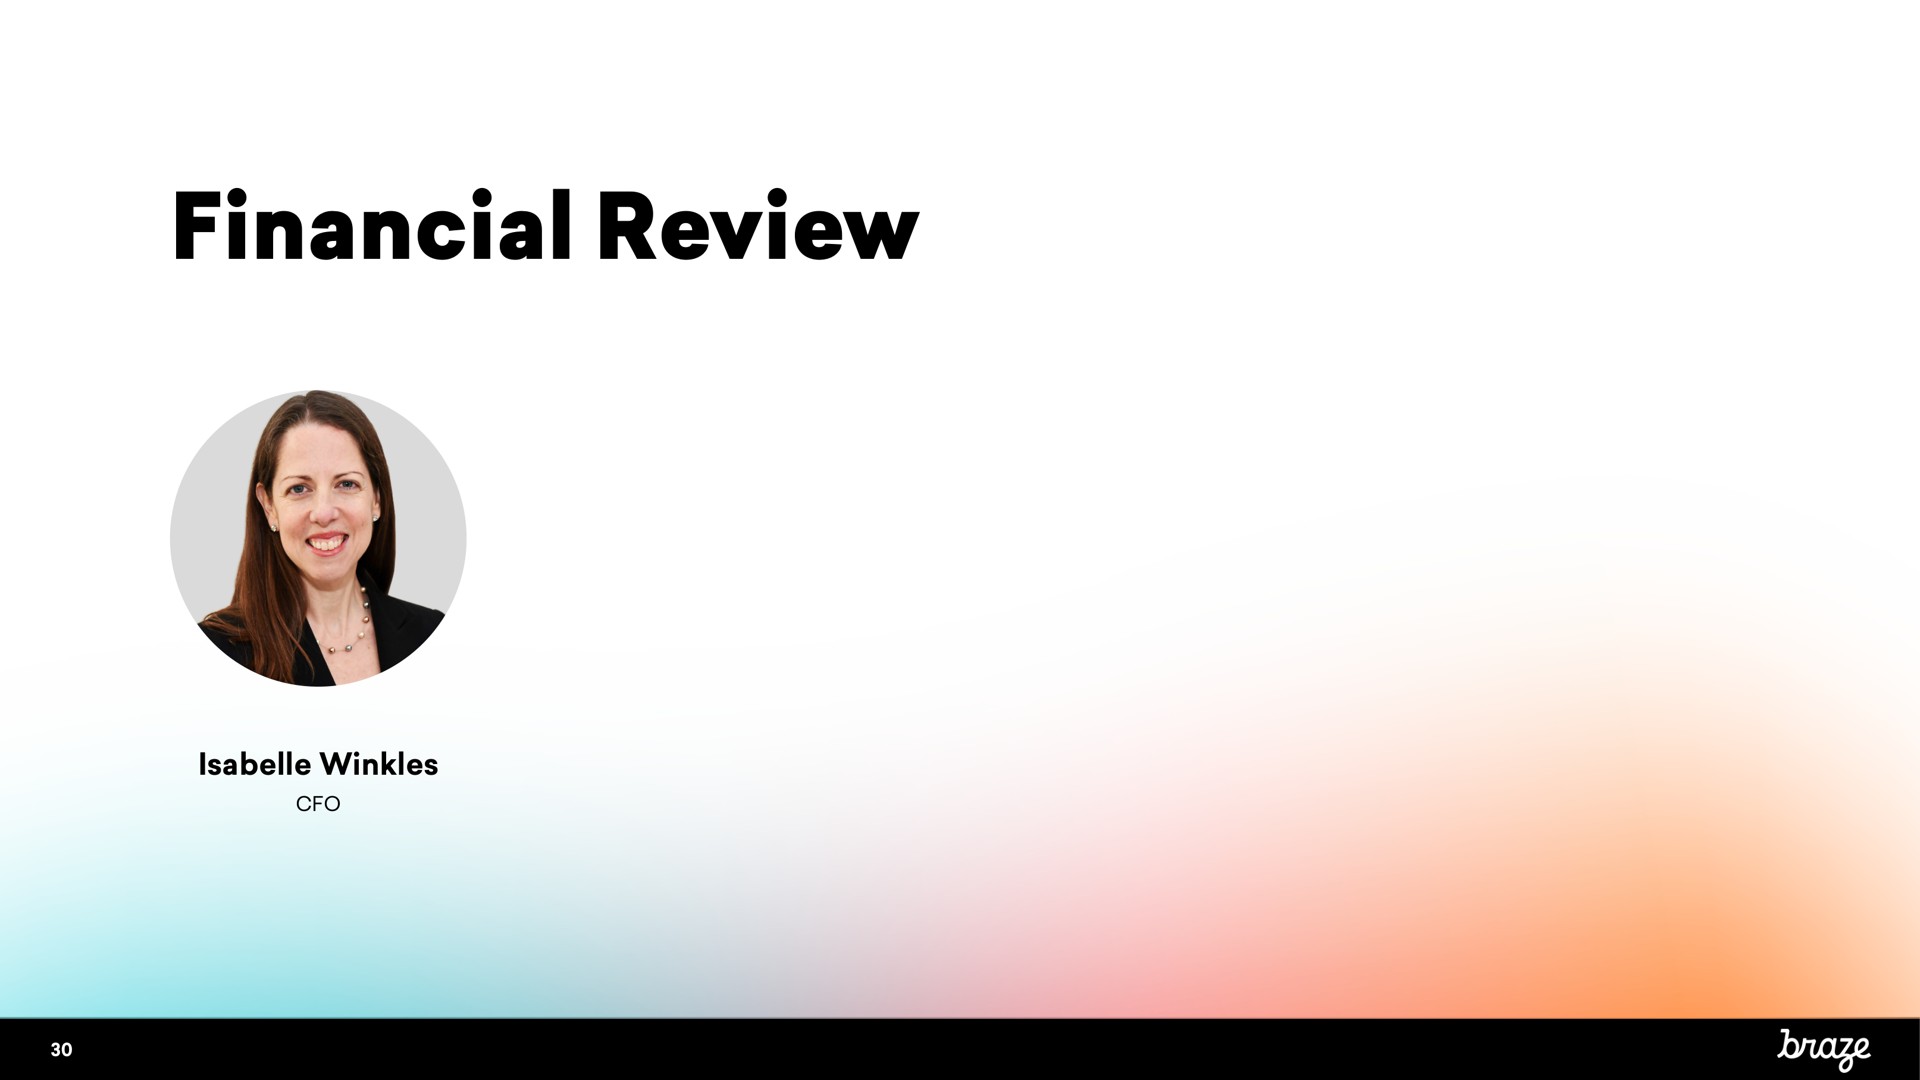 financial review | Braze